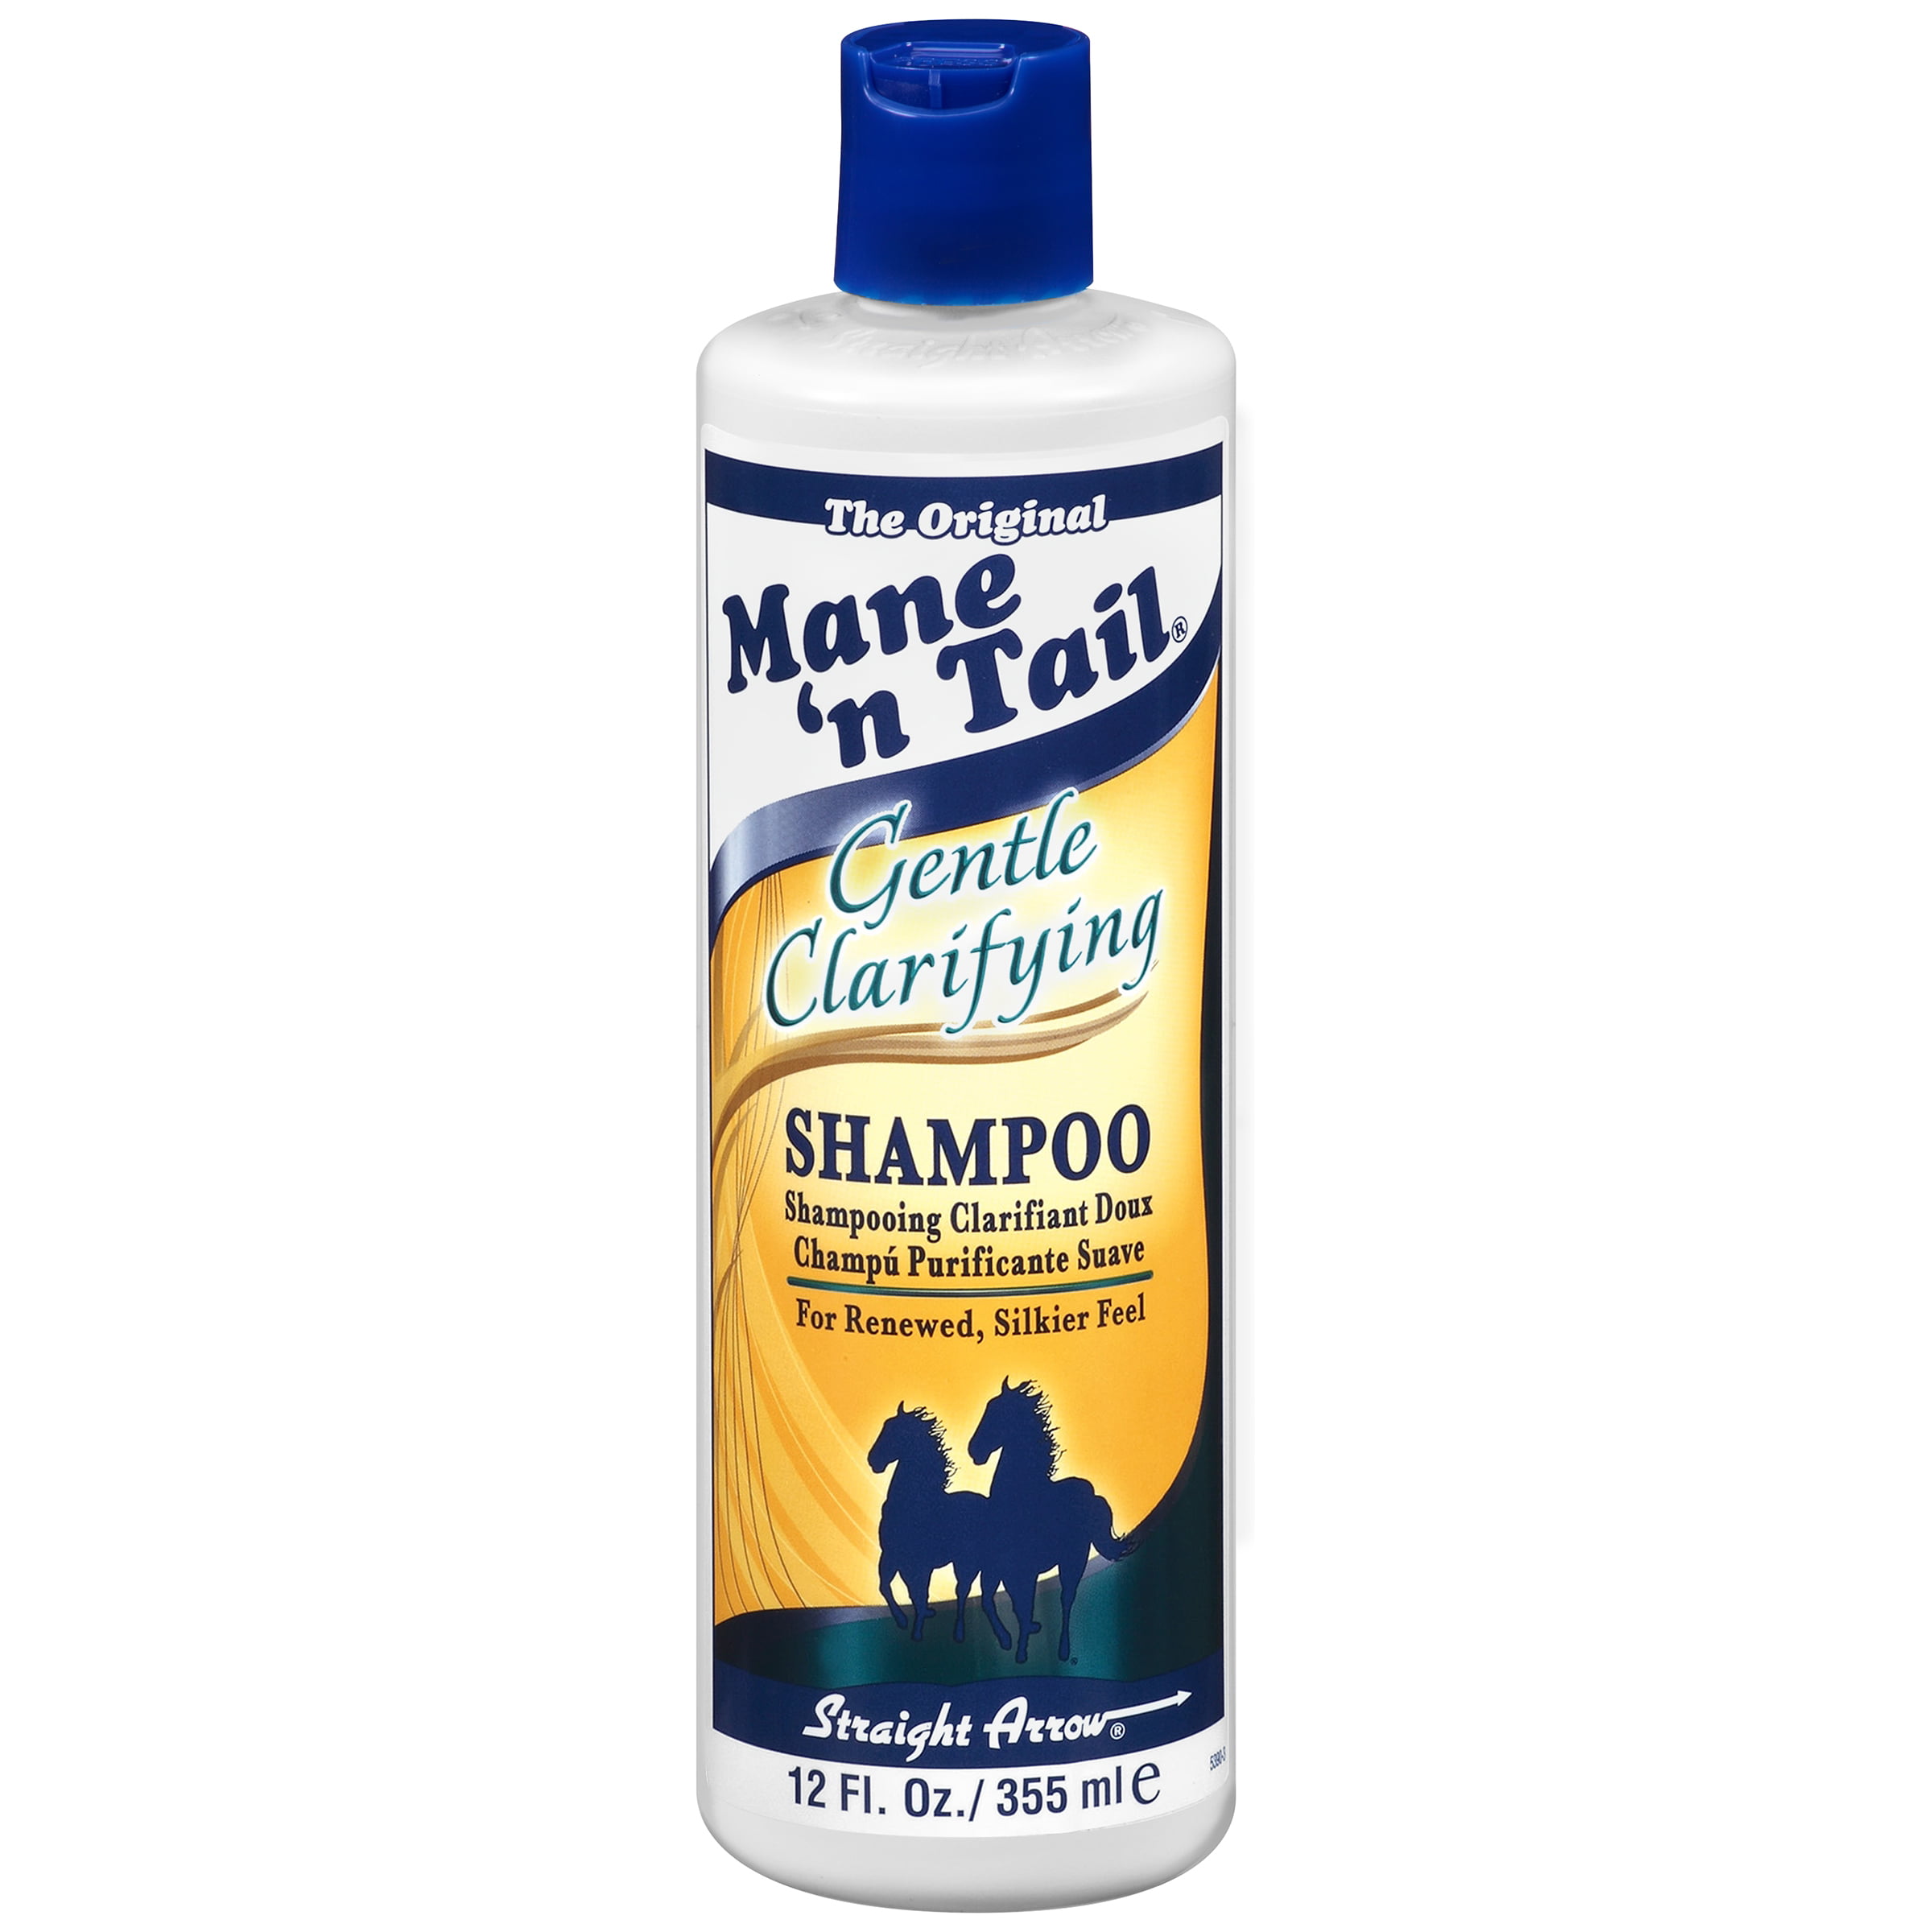 Clarifying shampoo